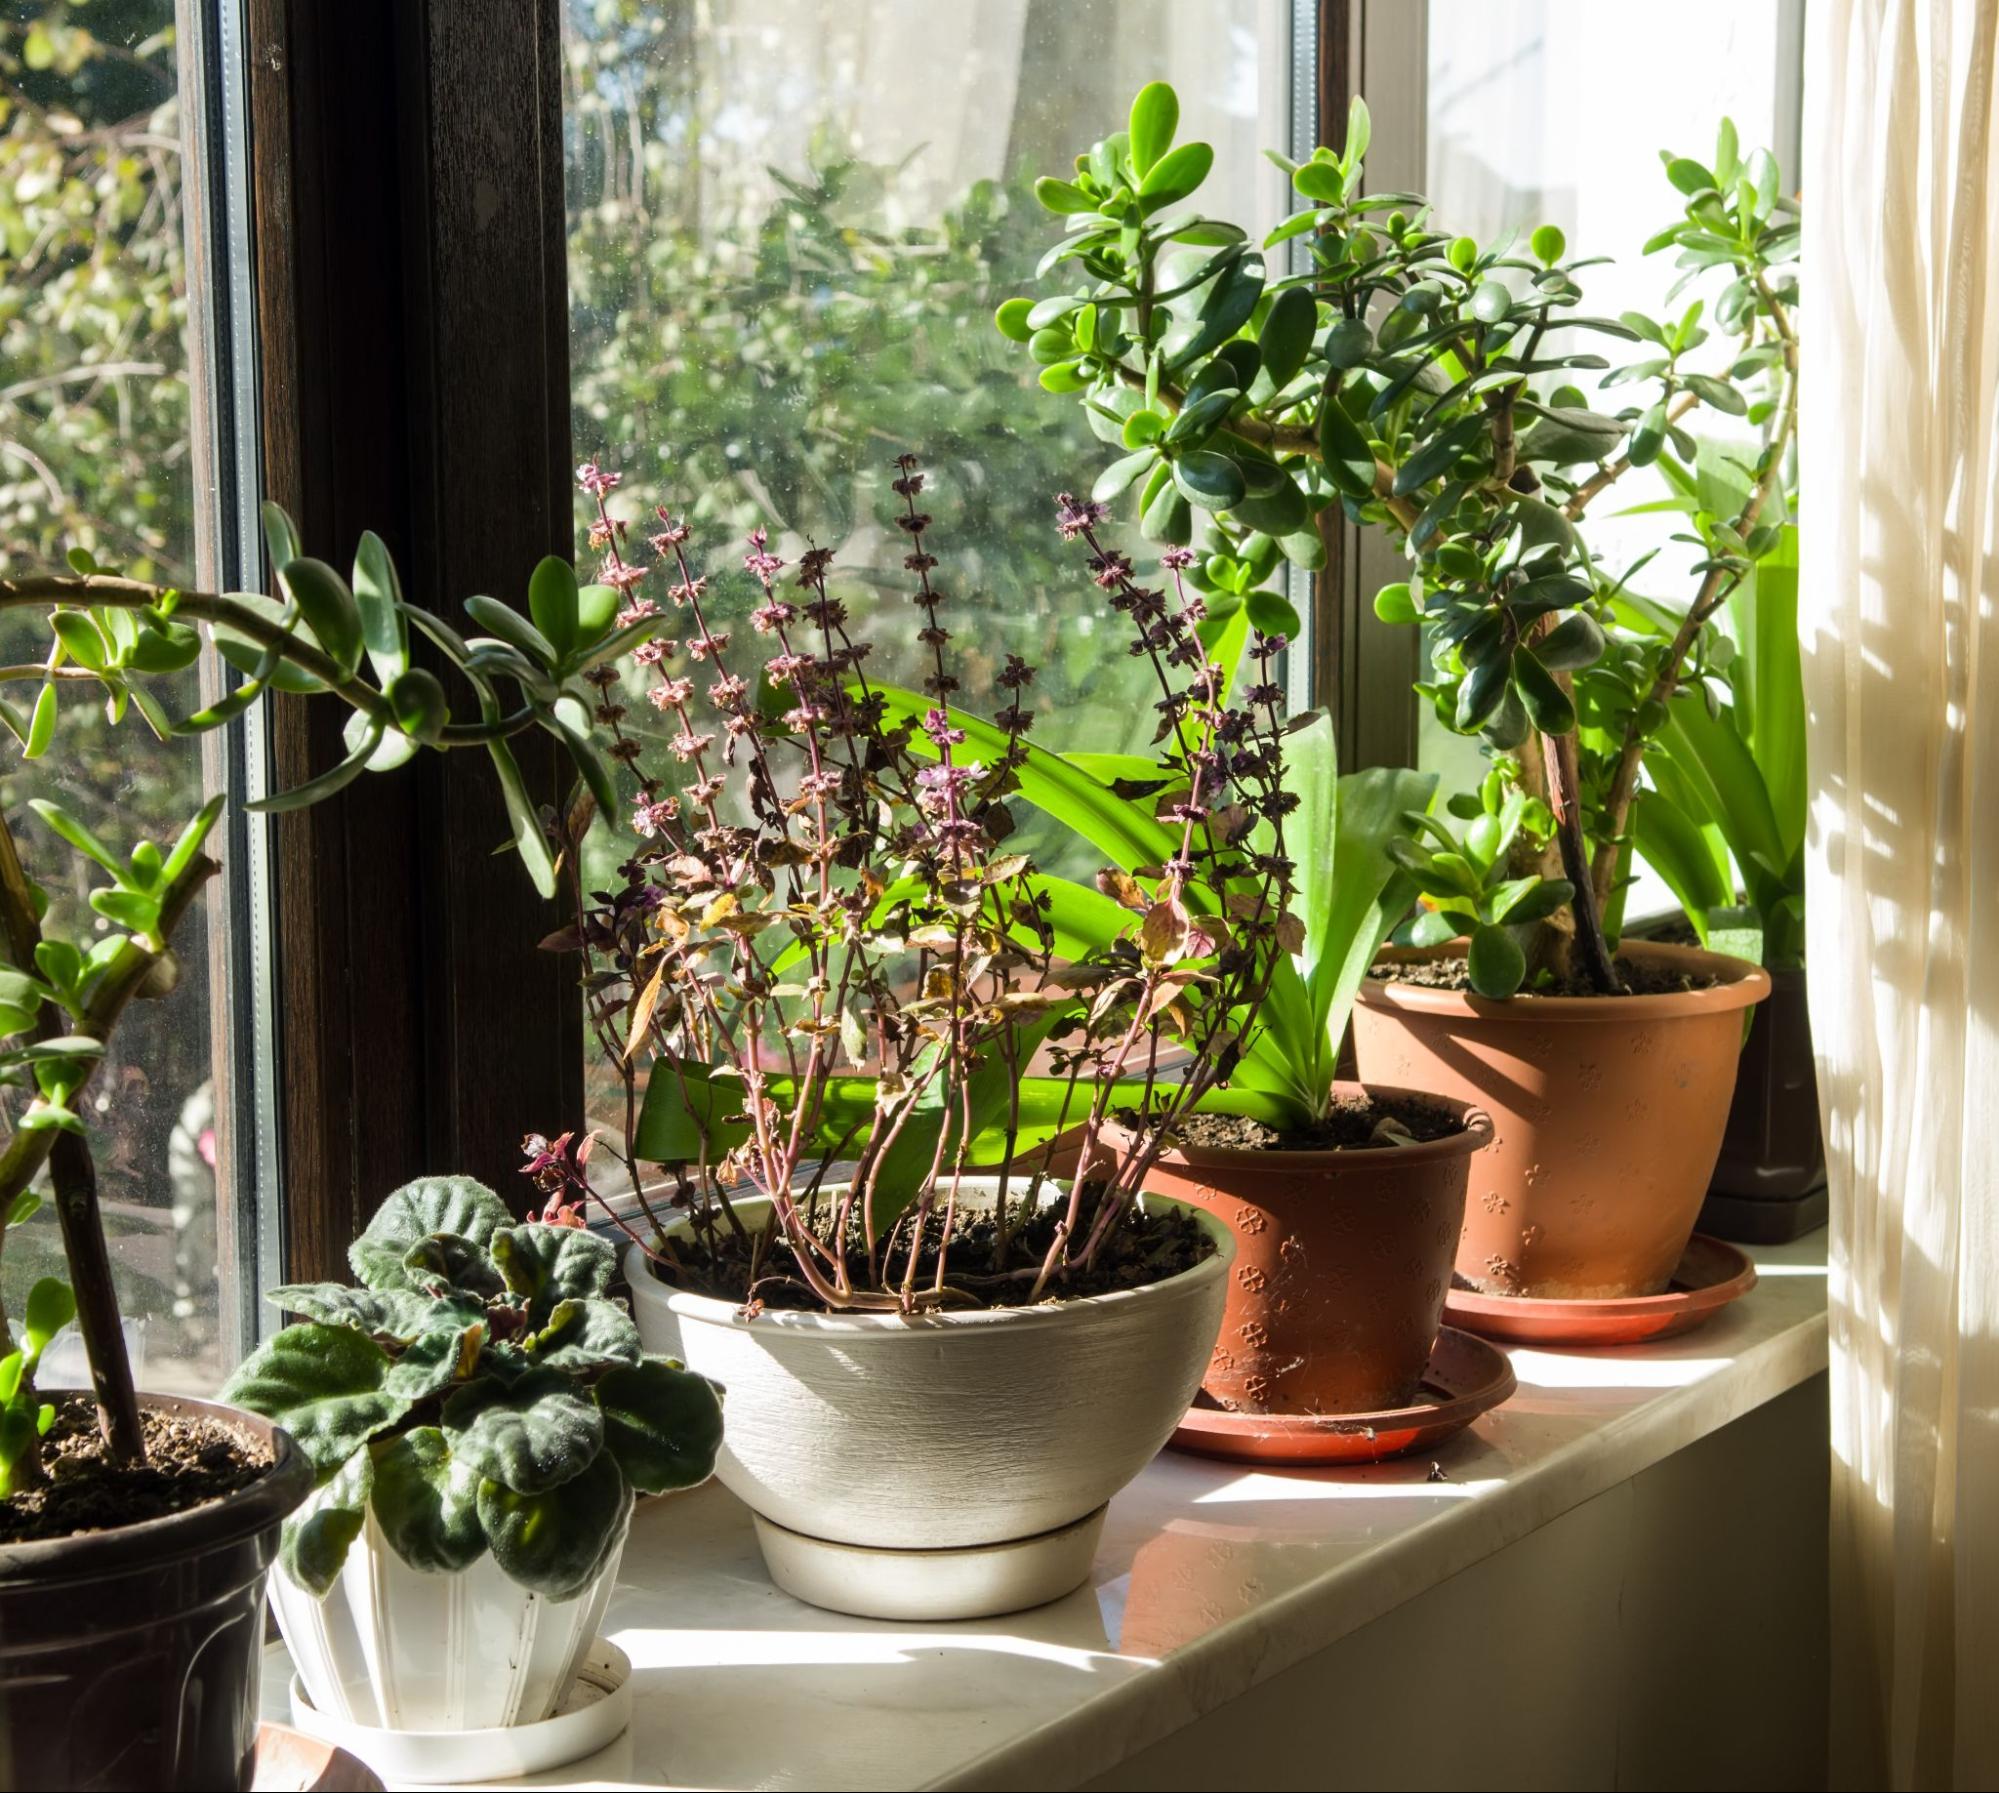 A group of plants on a windowsill.